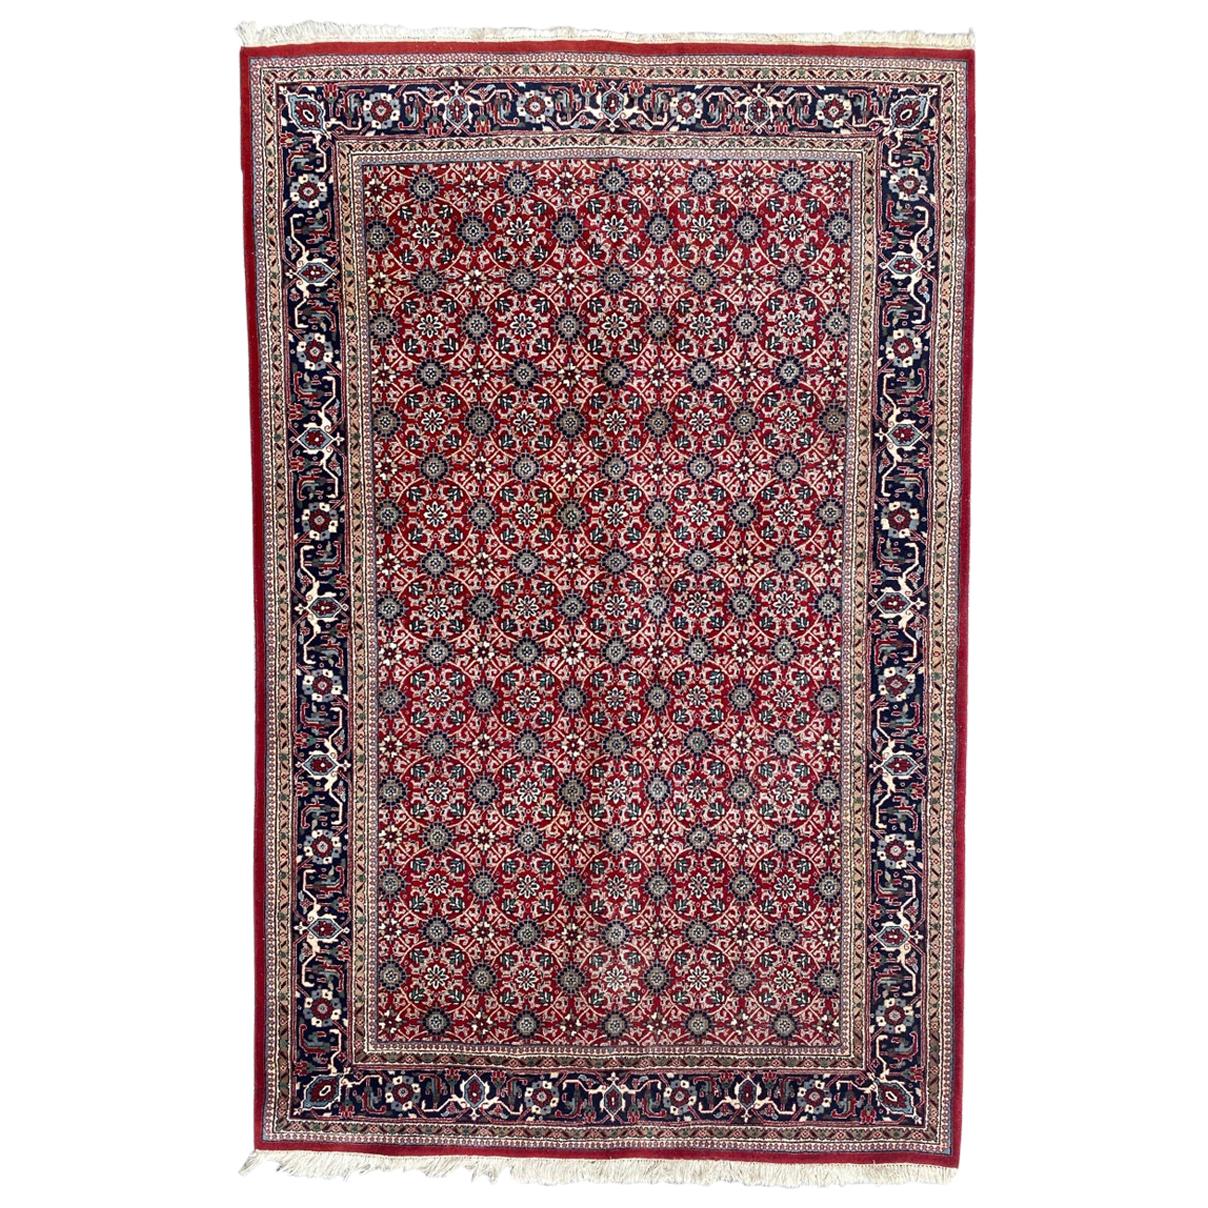 Bobyrug’s Nice Vintage Indian rug